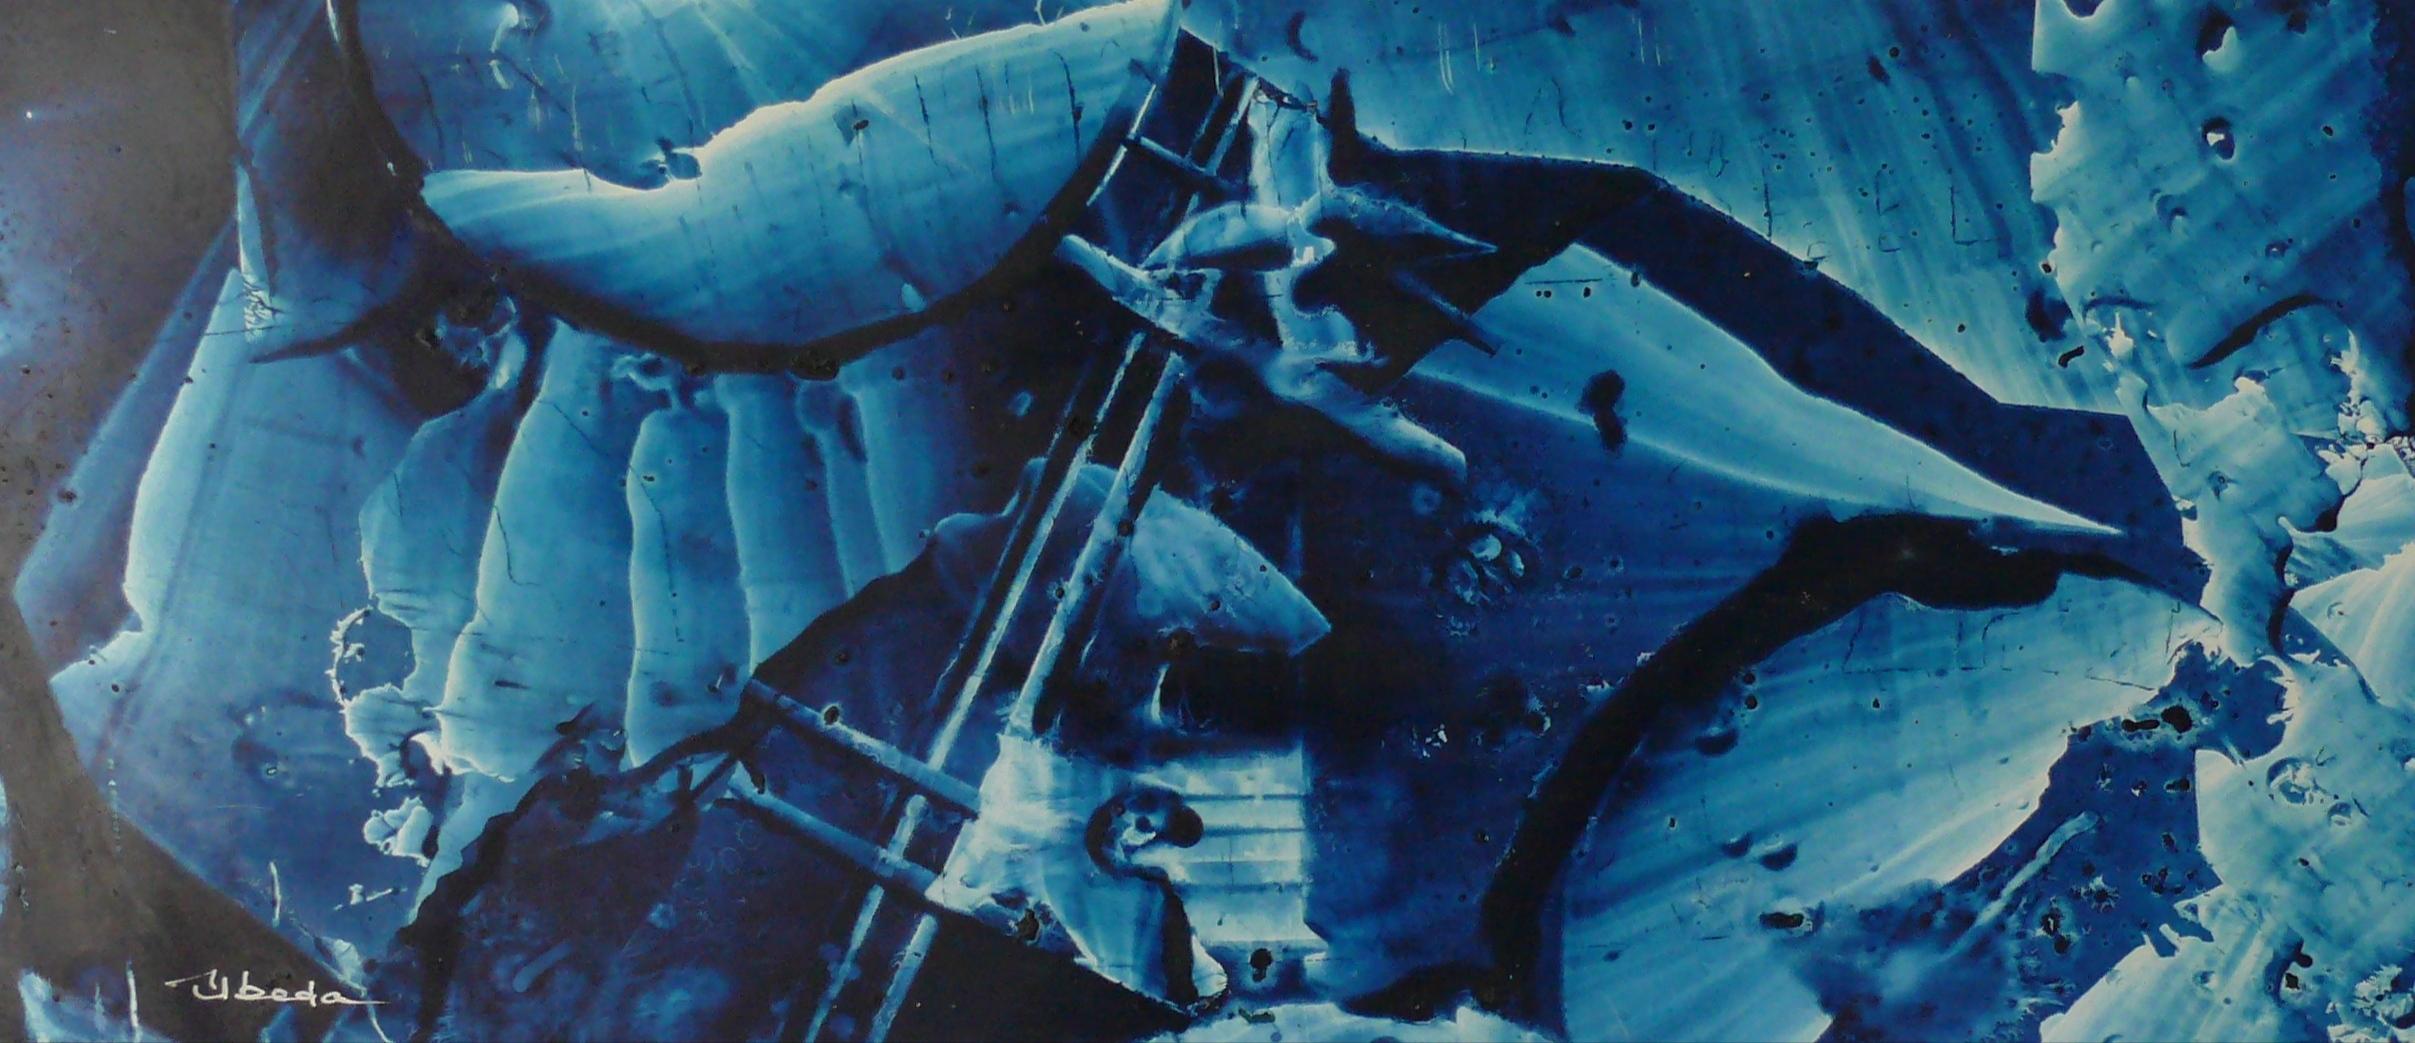 Ángel Luis Úbeda Figurative Painting - Under The Sea Series Nº 19. Úbeda. Oil fantasy blue color underwater landscape. 